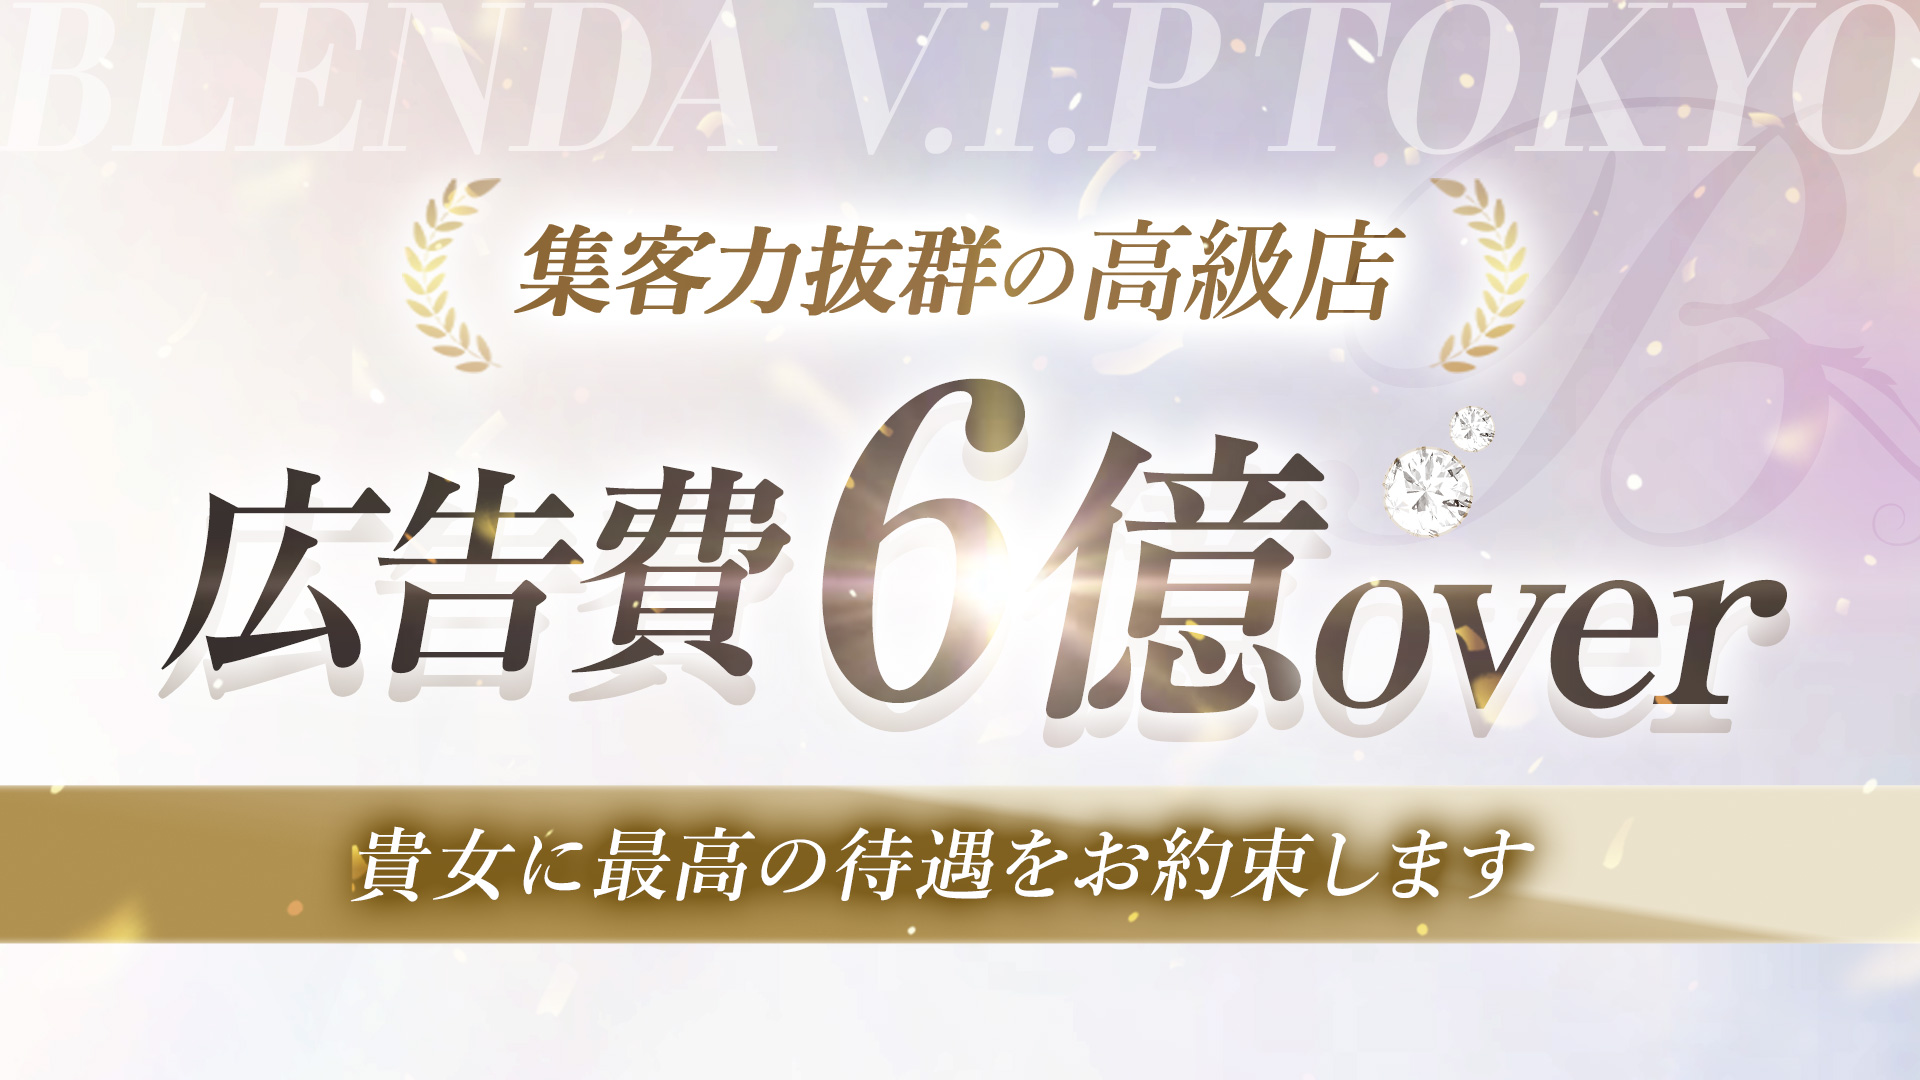 BLENDA VIP 東京店の求人画像